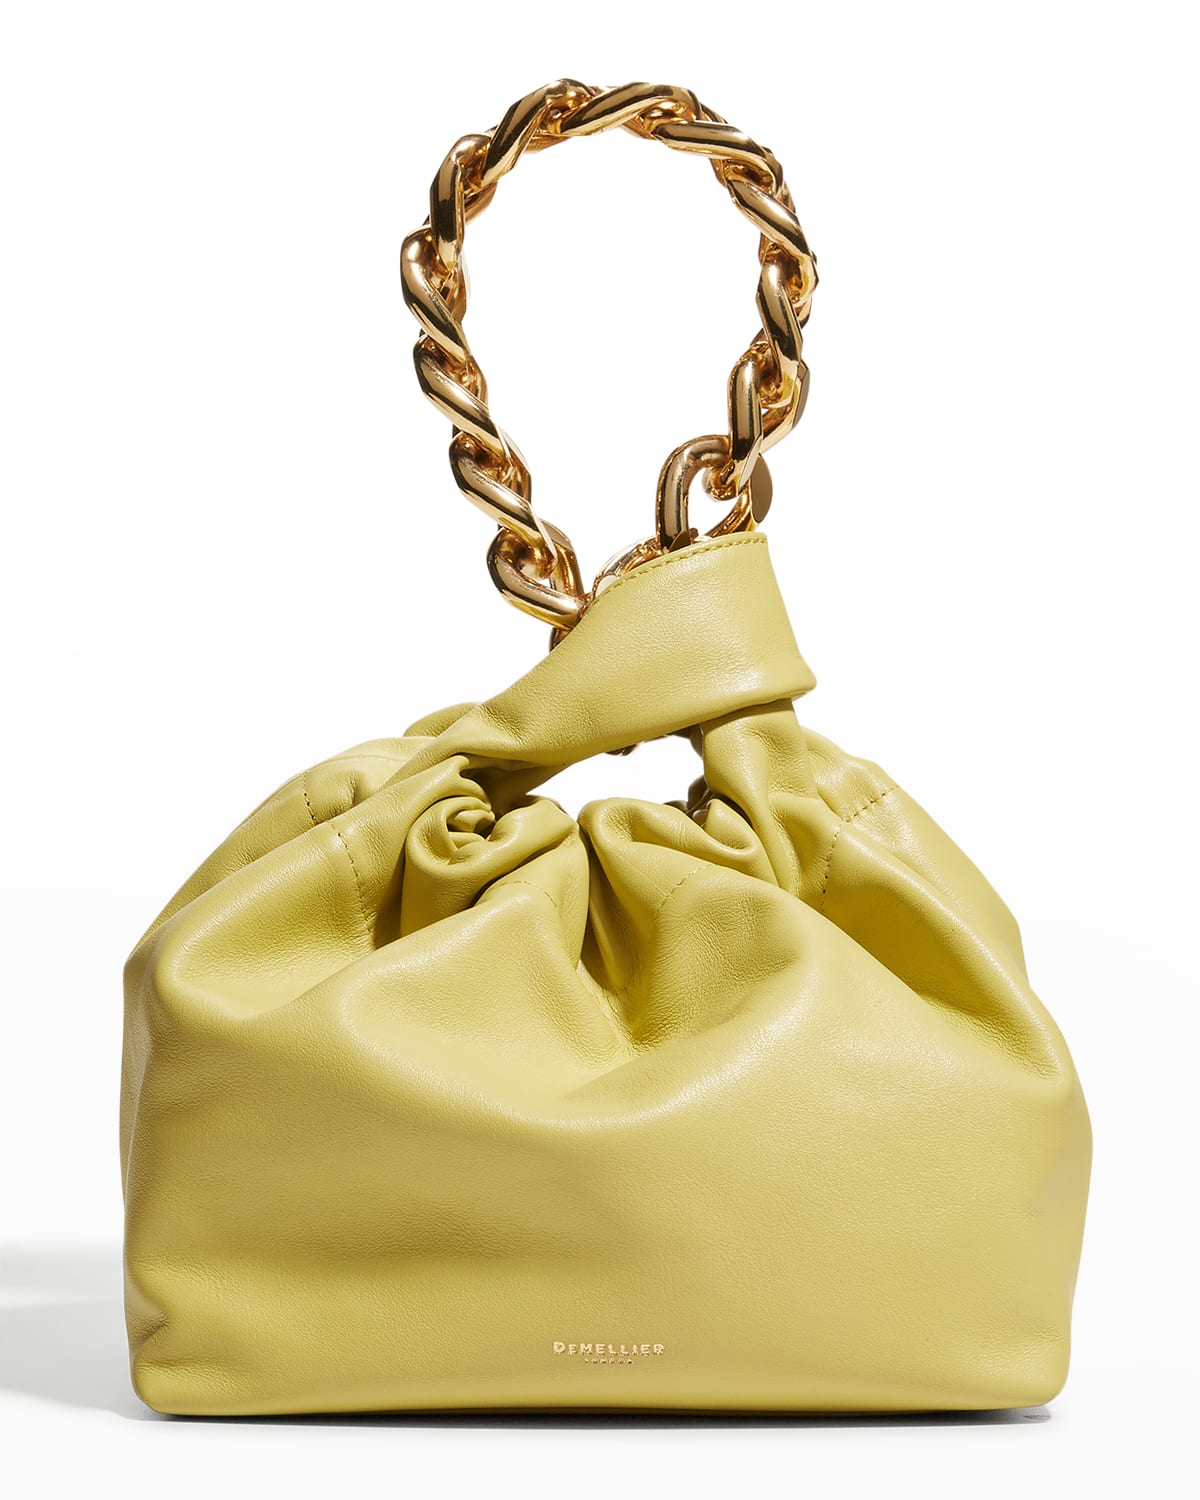 DANJUE Fashion Genuine Leather Handbag for Men Multipurpose Casual Clutch Large Capacity Travel Bag with Card Slots 212-1 